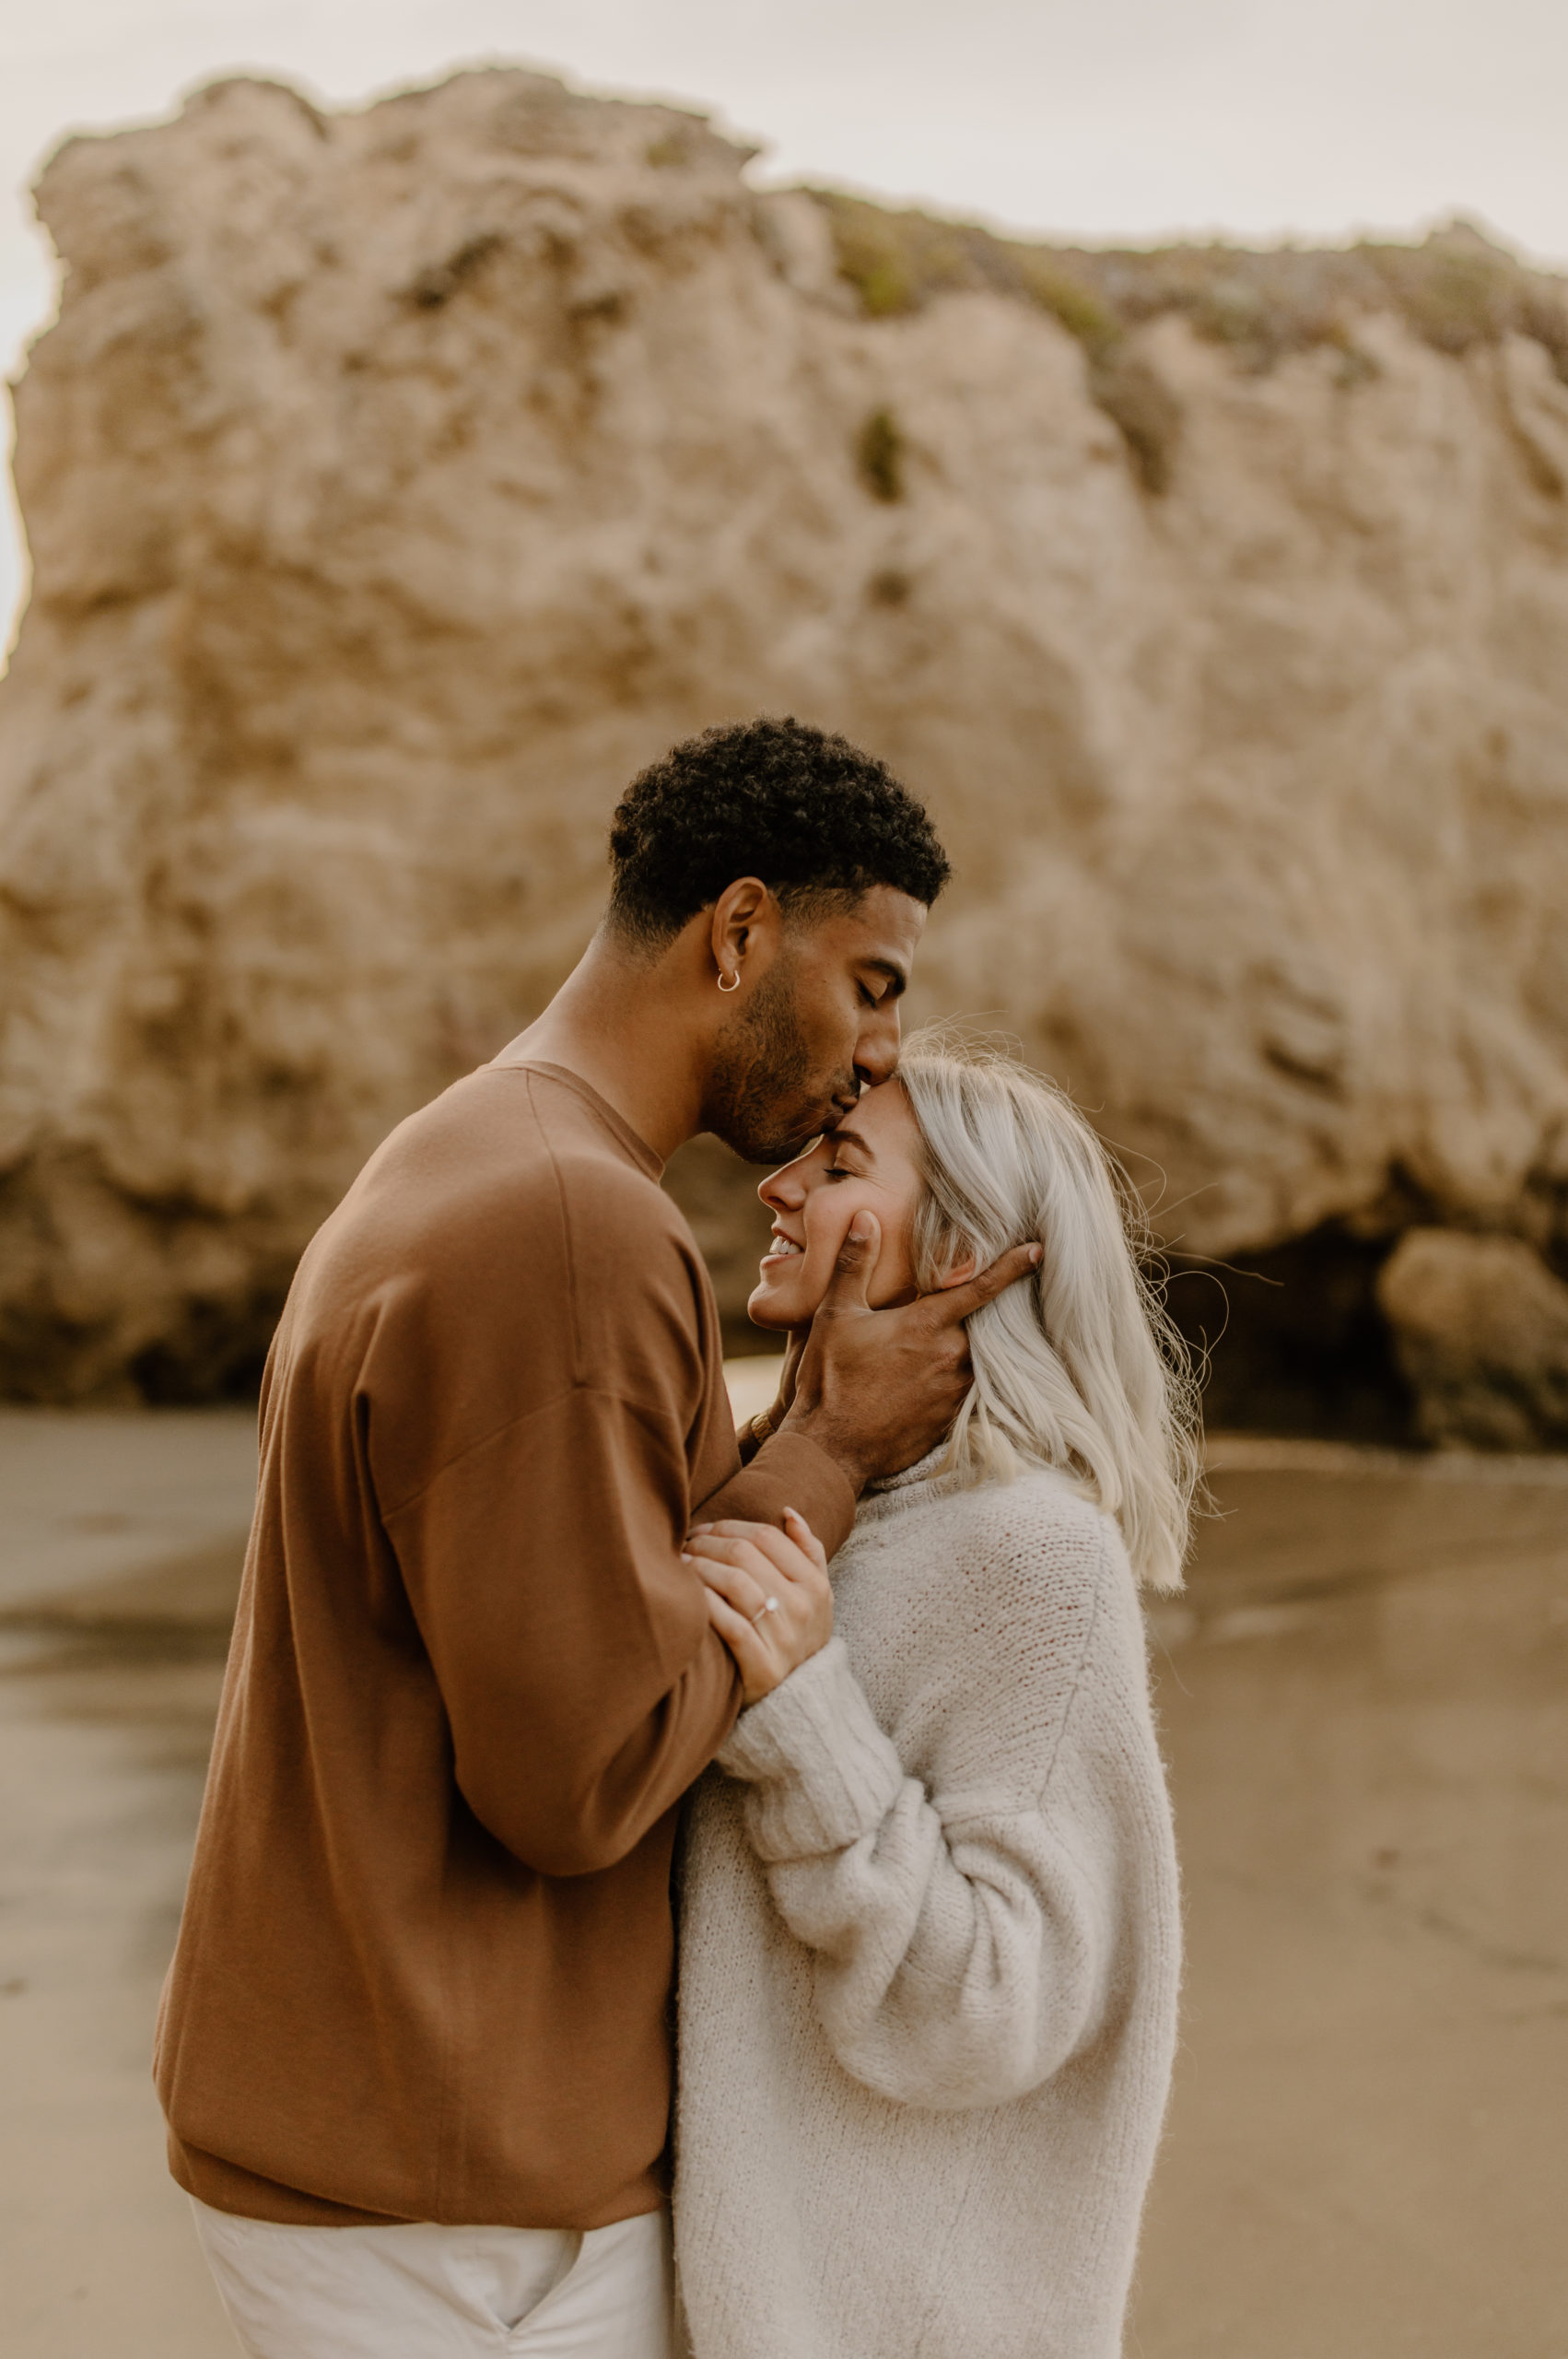 candid unique engagement photos at the beach in Malibu California forehead kiss